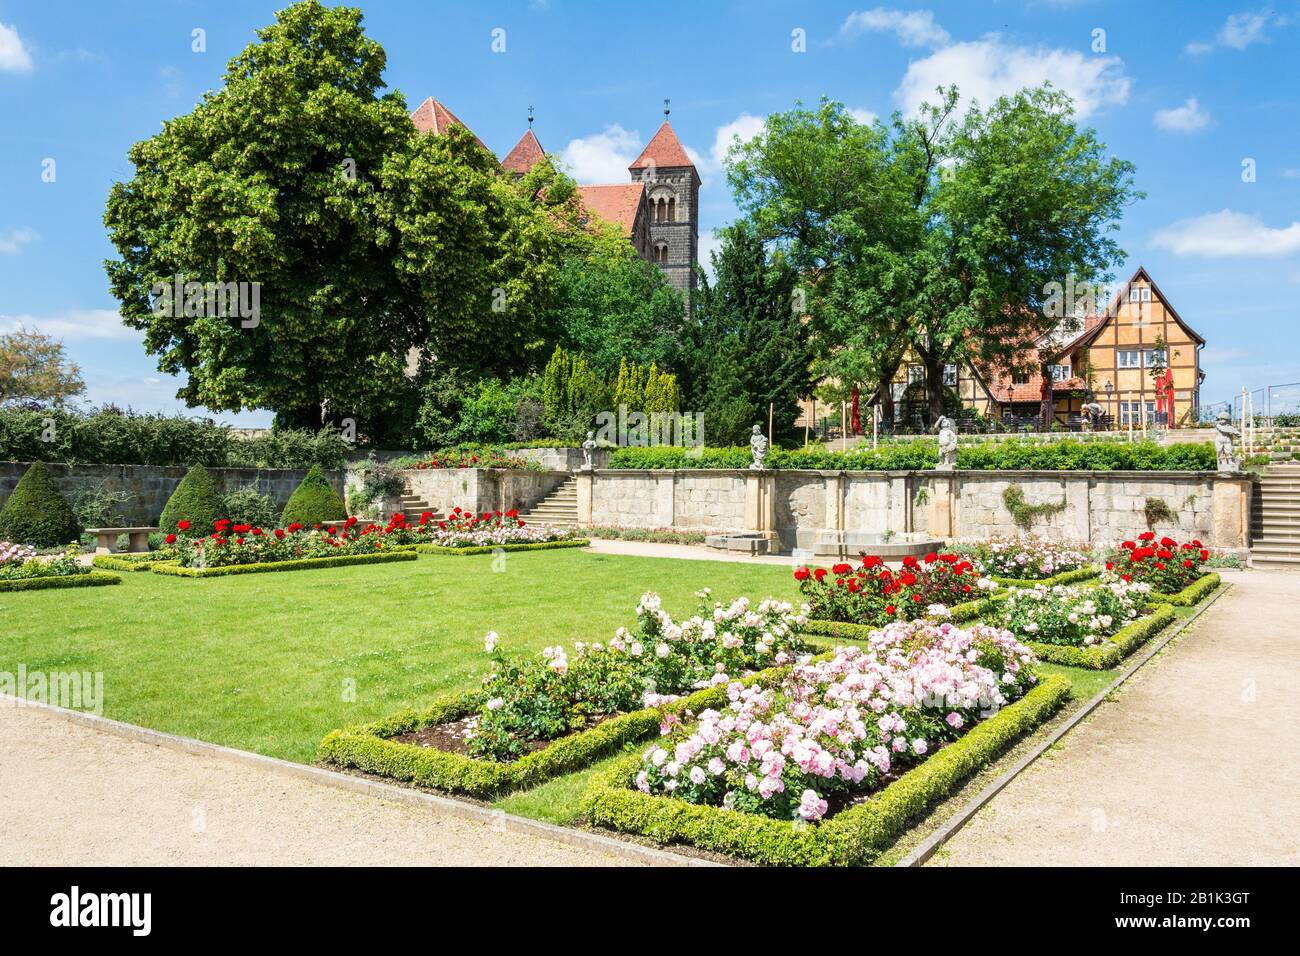 Quedlinburg, Germany – June 20, 2016. Schlossgarten Quedlinburg garden with vegetation and towers of Stiftskirche St. Servatius in the background. Stock Photo